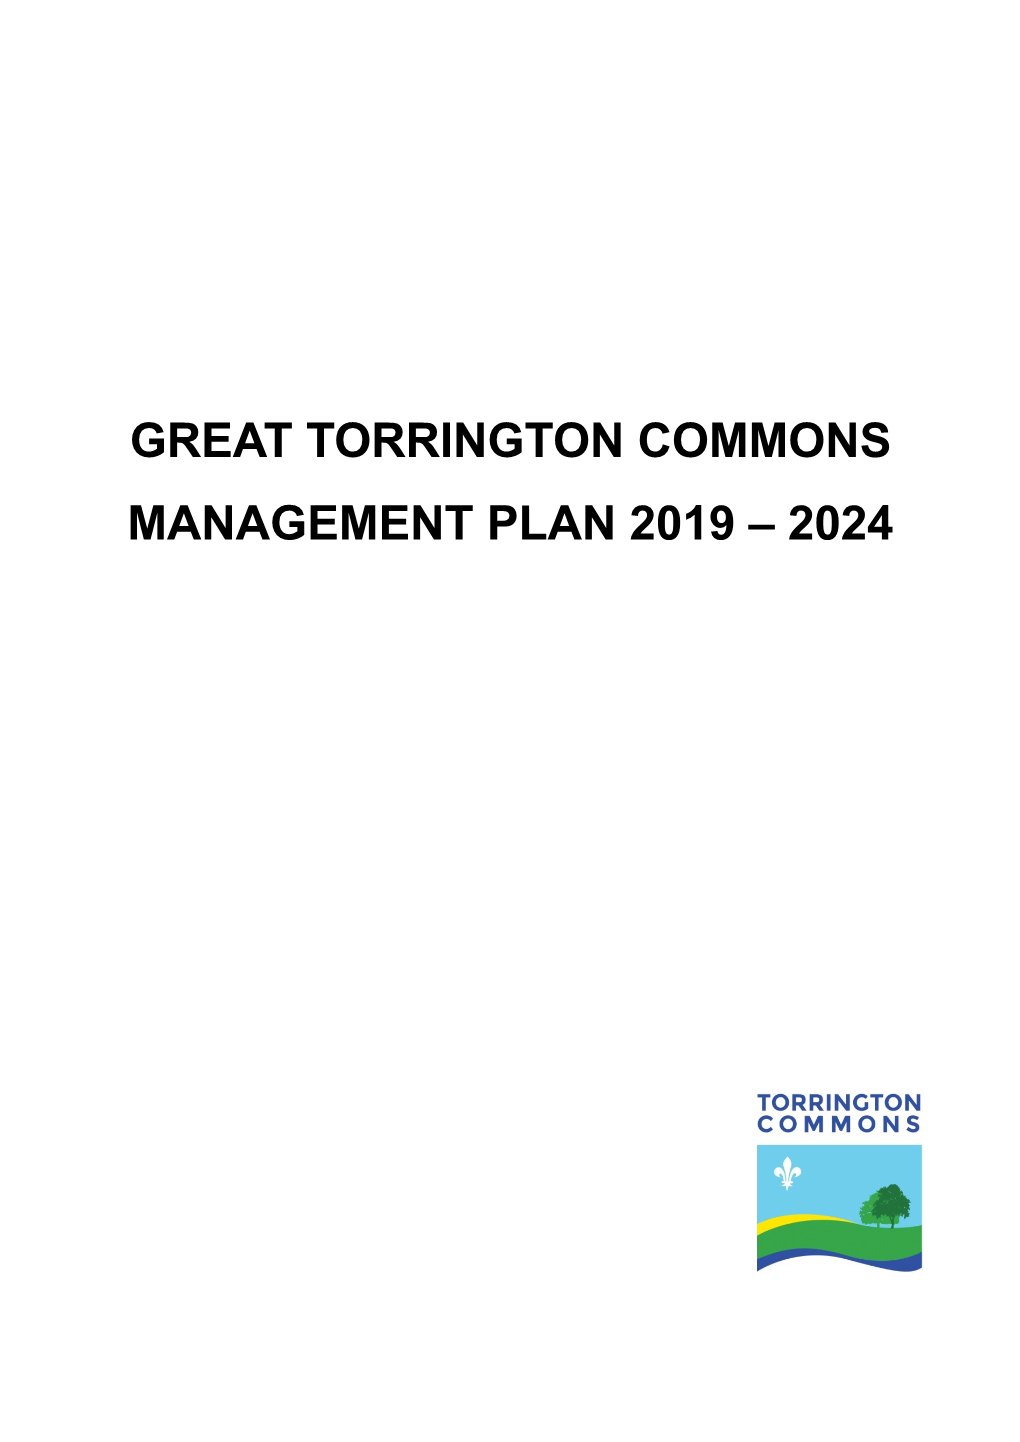 Great Torrington Commons Management Plan 2019